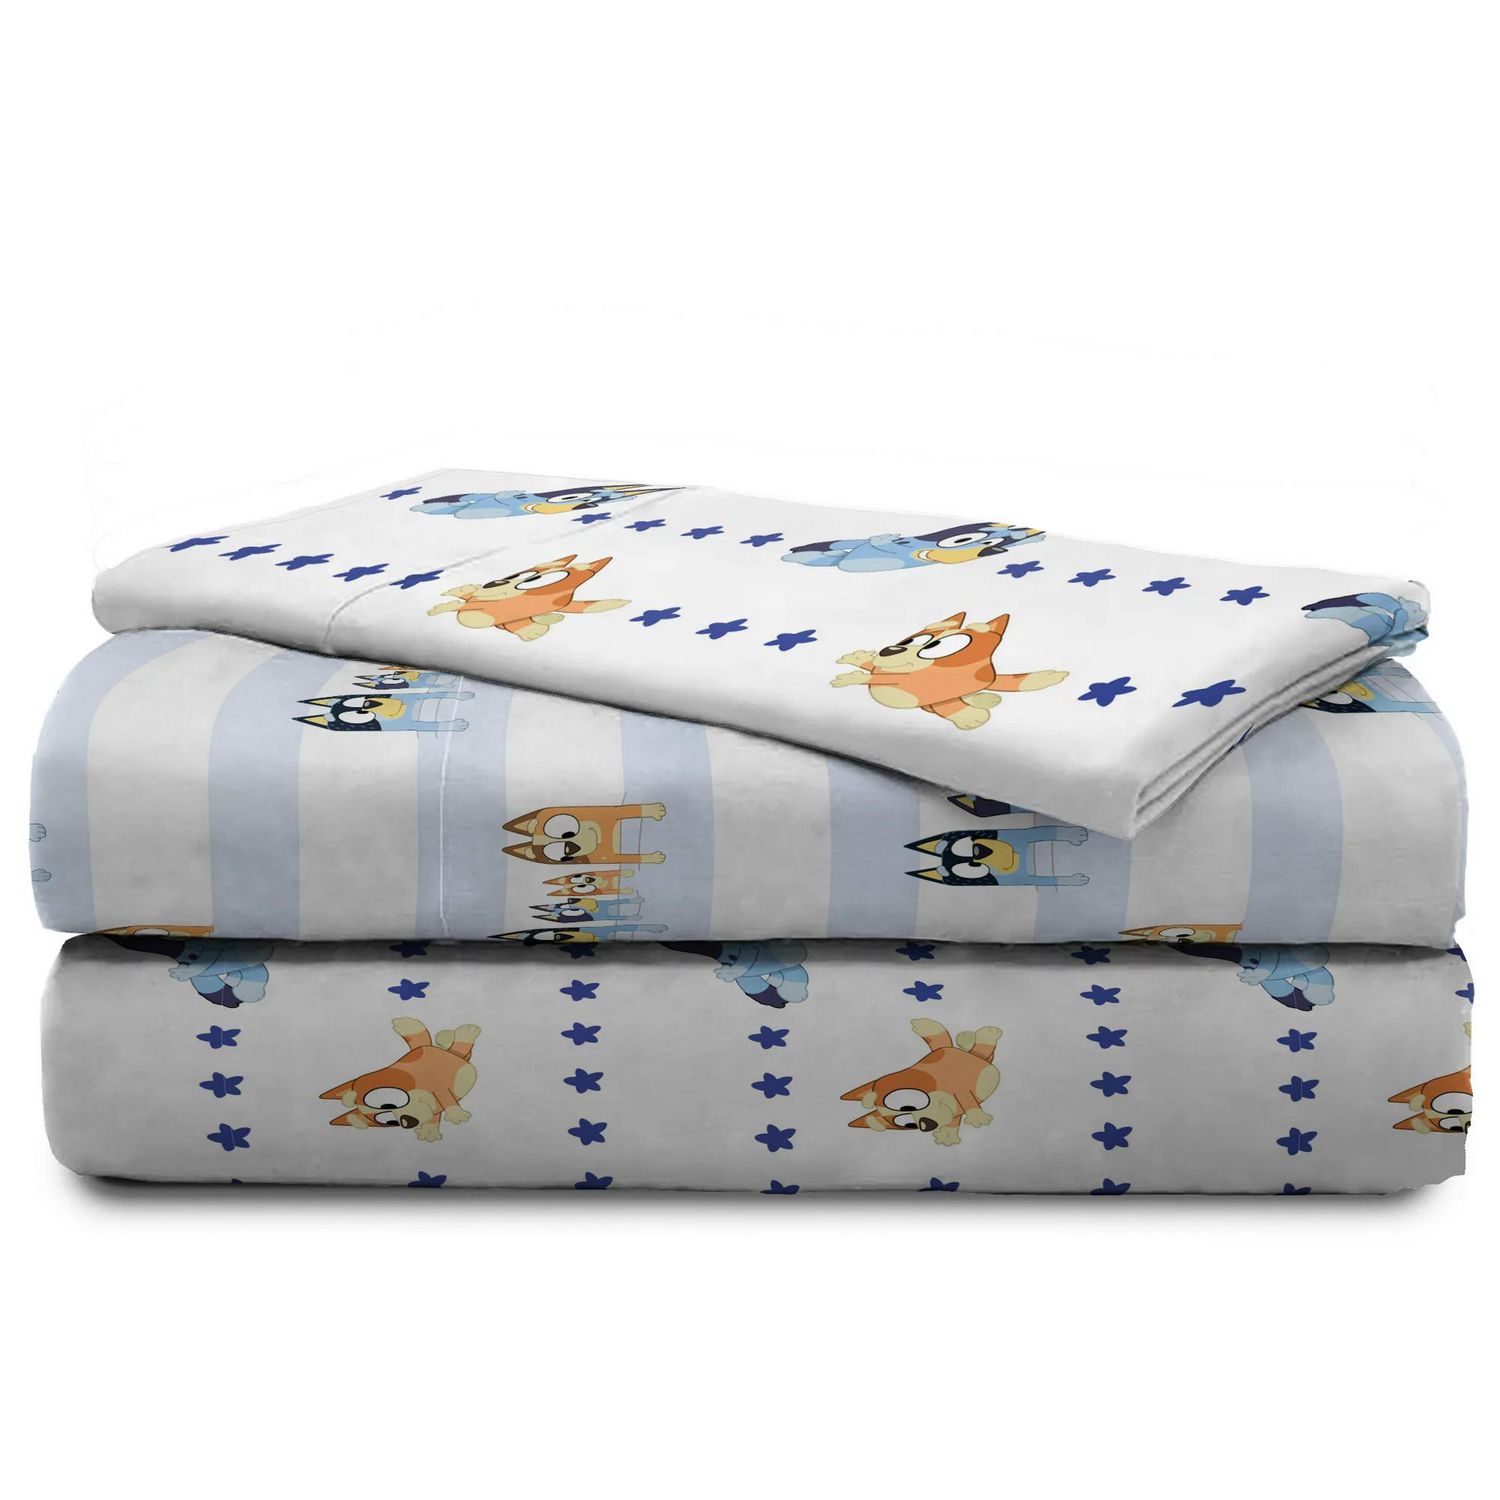 Jay Franco Bluey & Bingo 7 Piece Full Size Bed Set - Includes Comforter &  Sheet Set - Super Soft Kids Bedding Fade Resistant Microfiber (Official